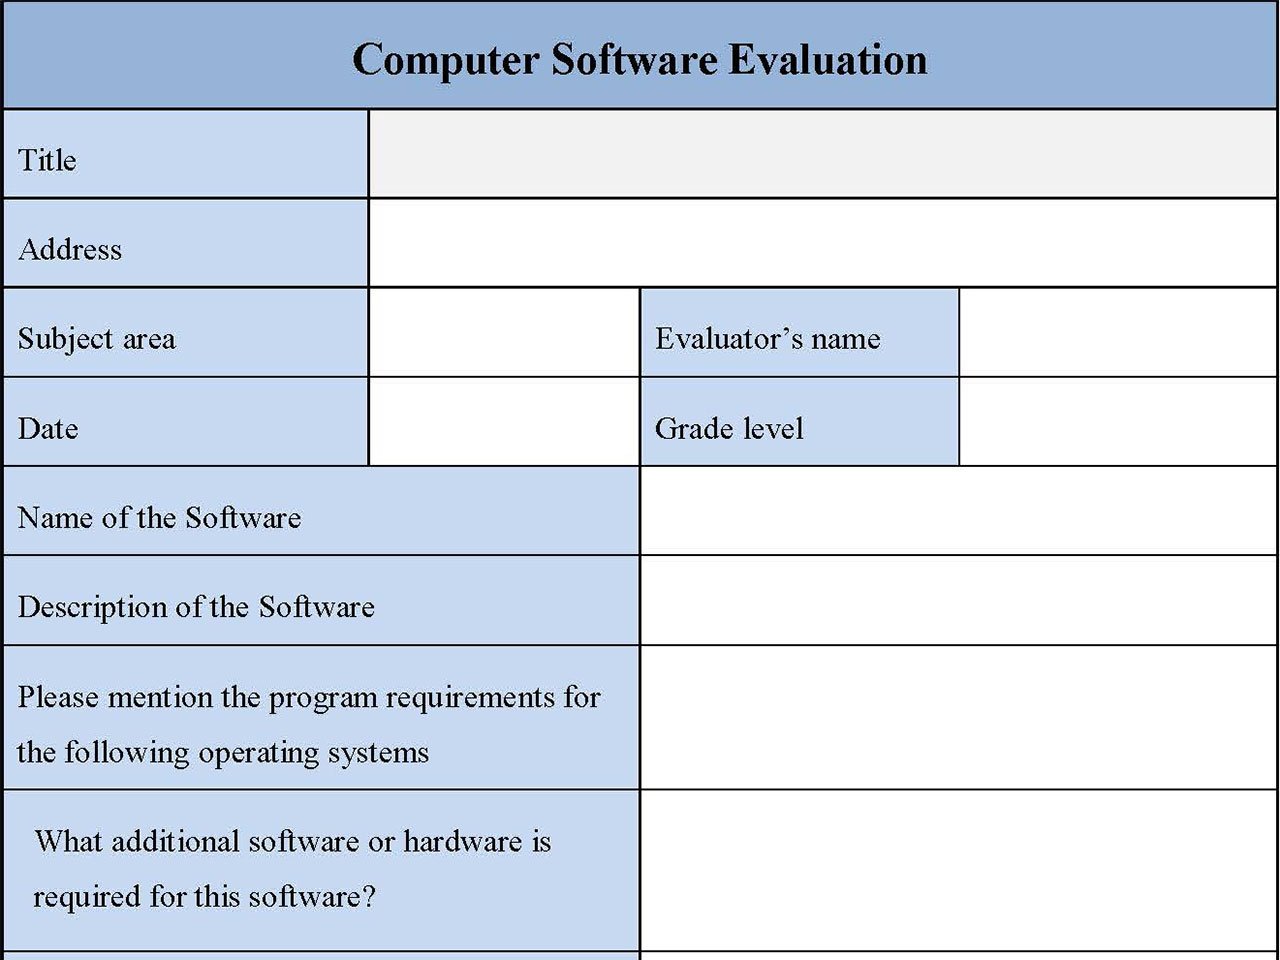 Computer Software Evaluation Form